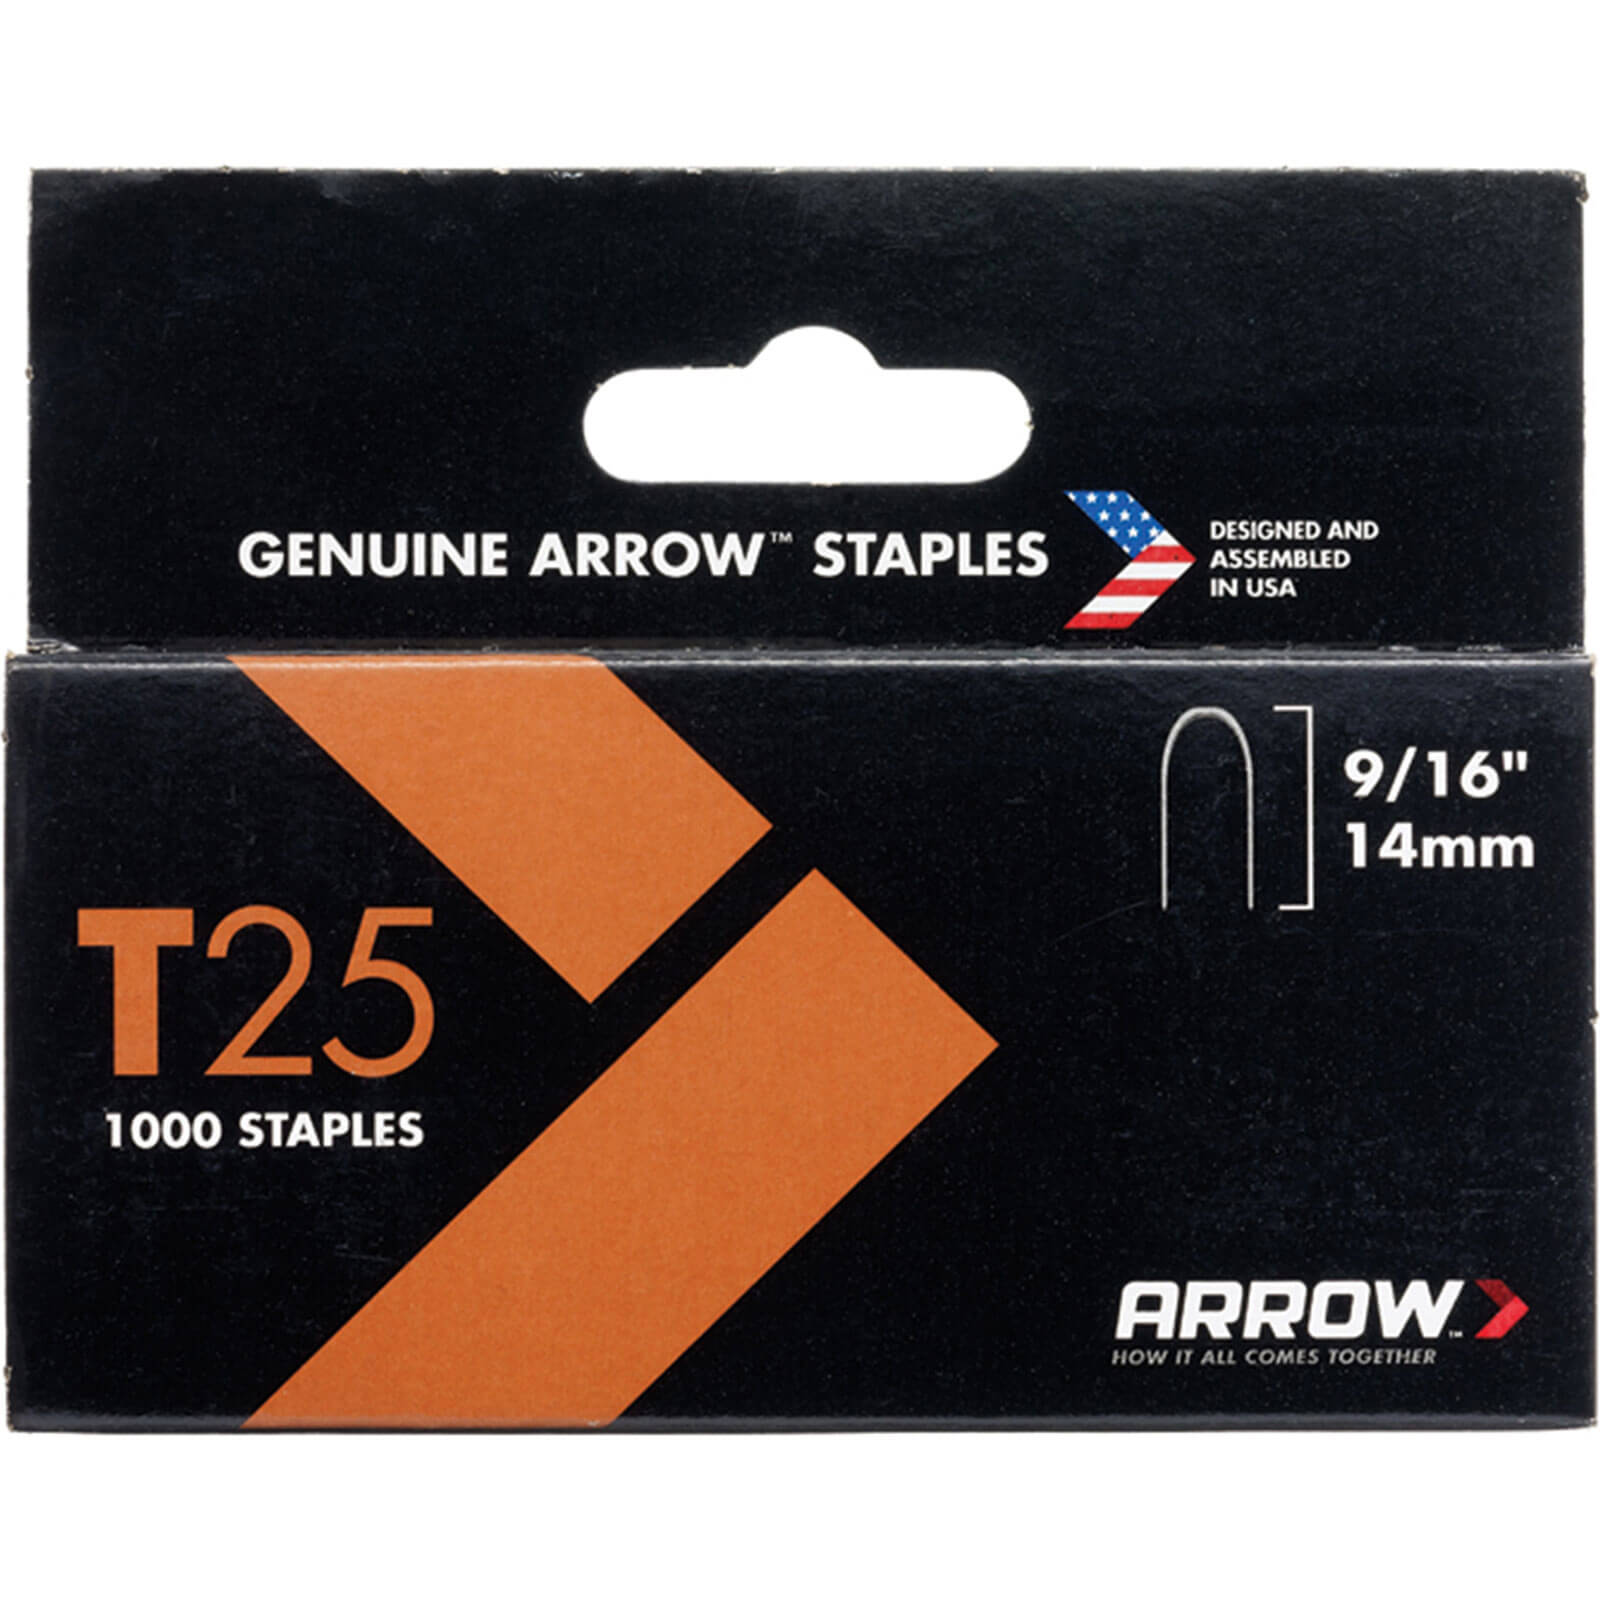 Arrow T25 Staples Pack of 5000 9/16"